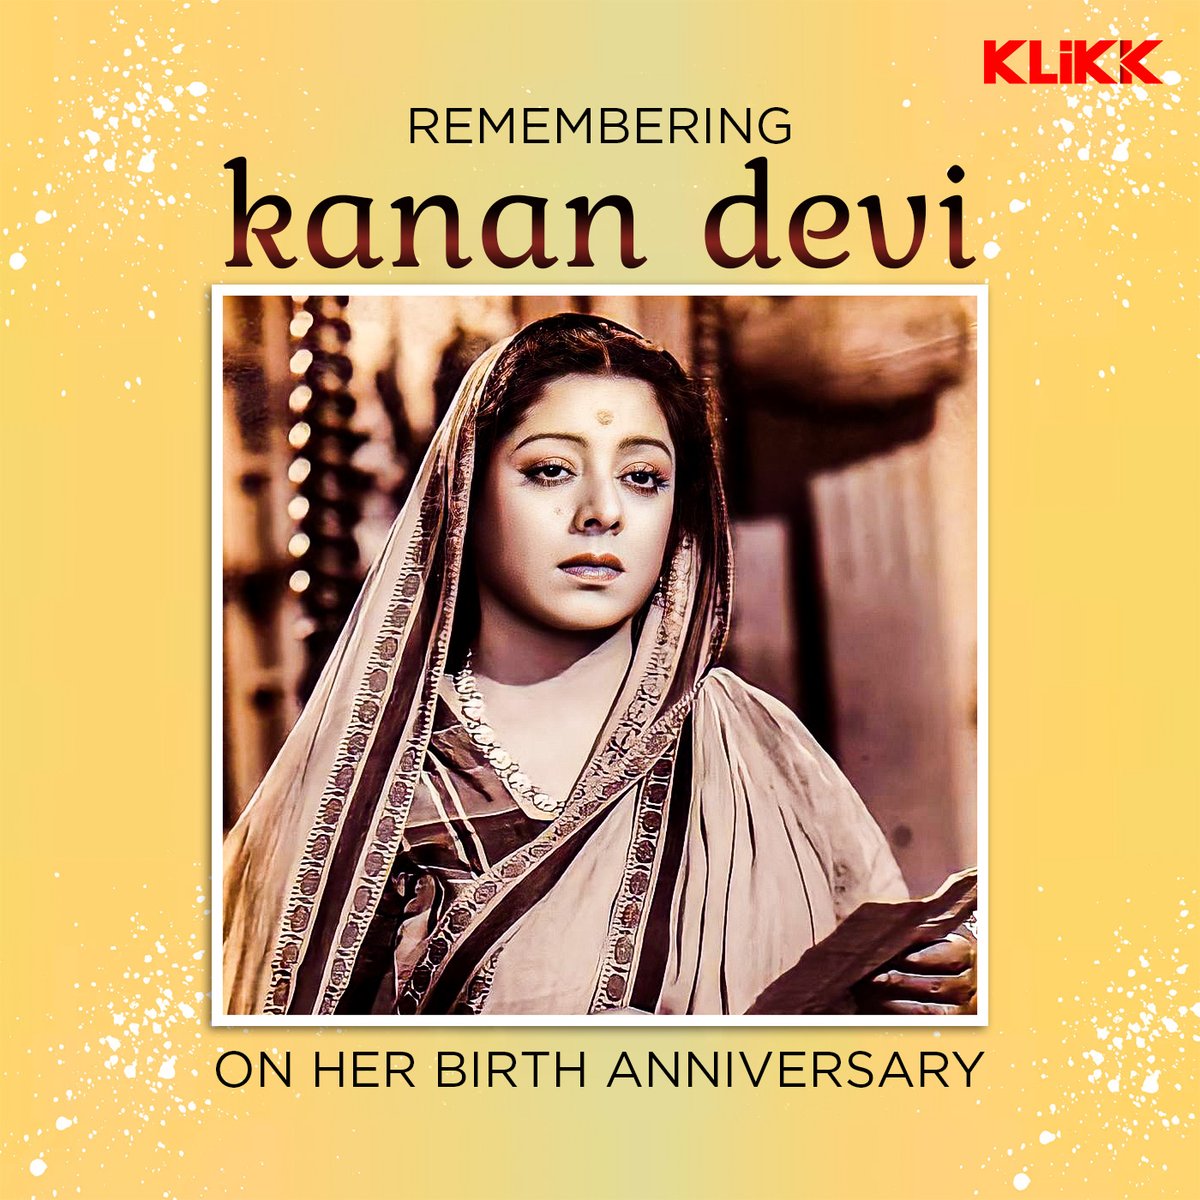 Remembering #KananDevi on her birth anniversary💐
#Klikk #BinodonJokhonTokhon